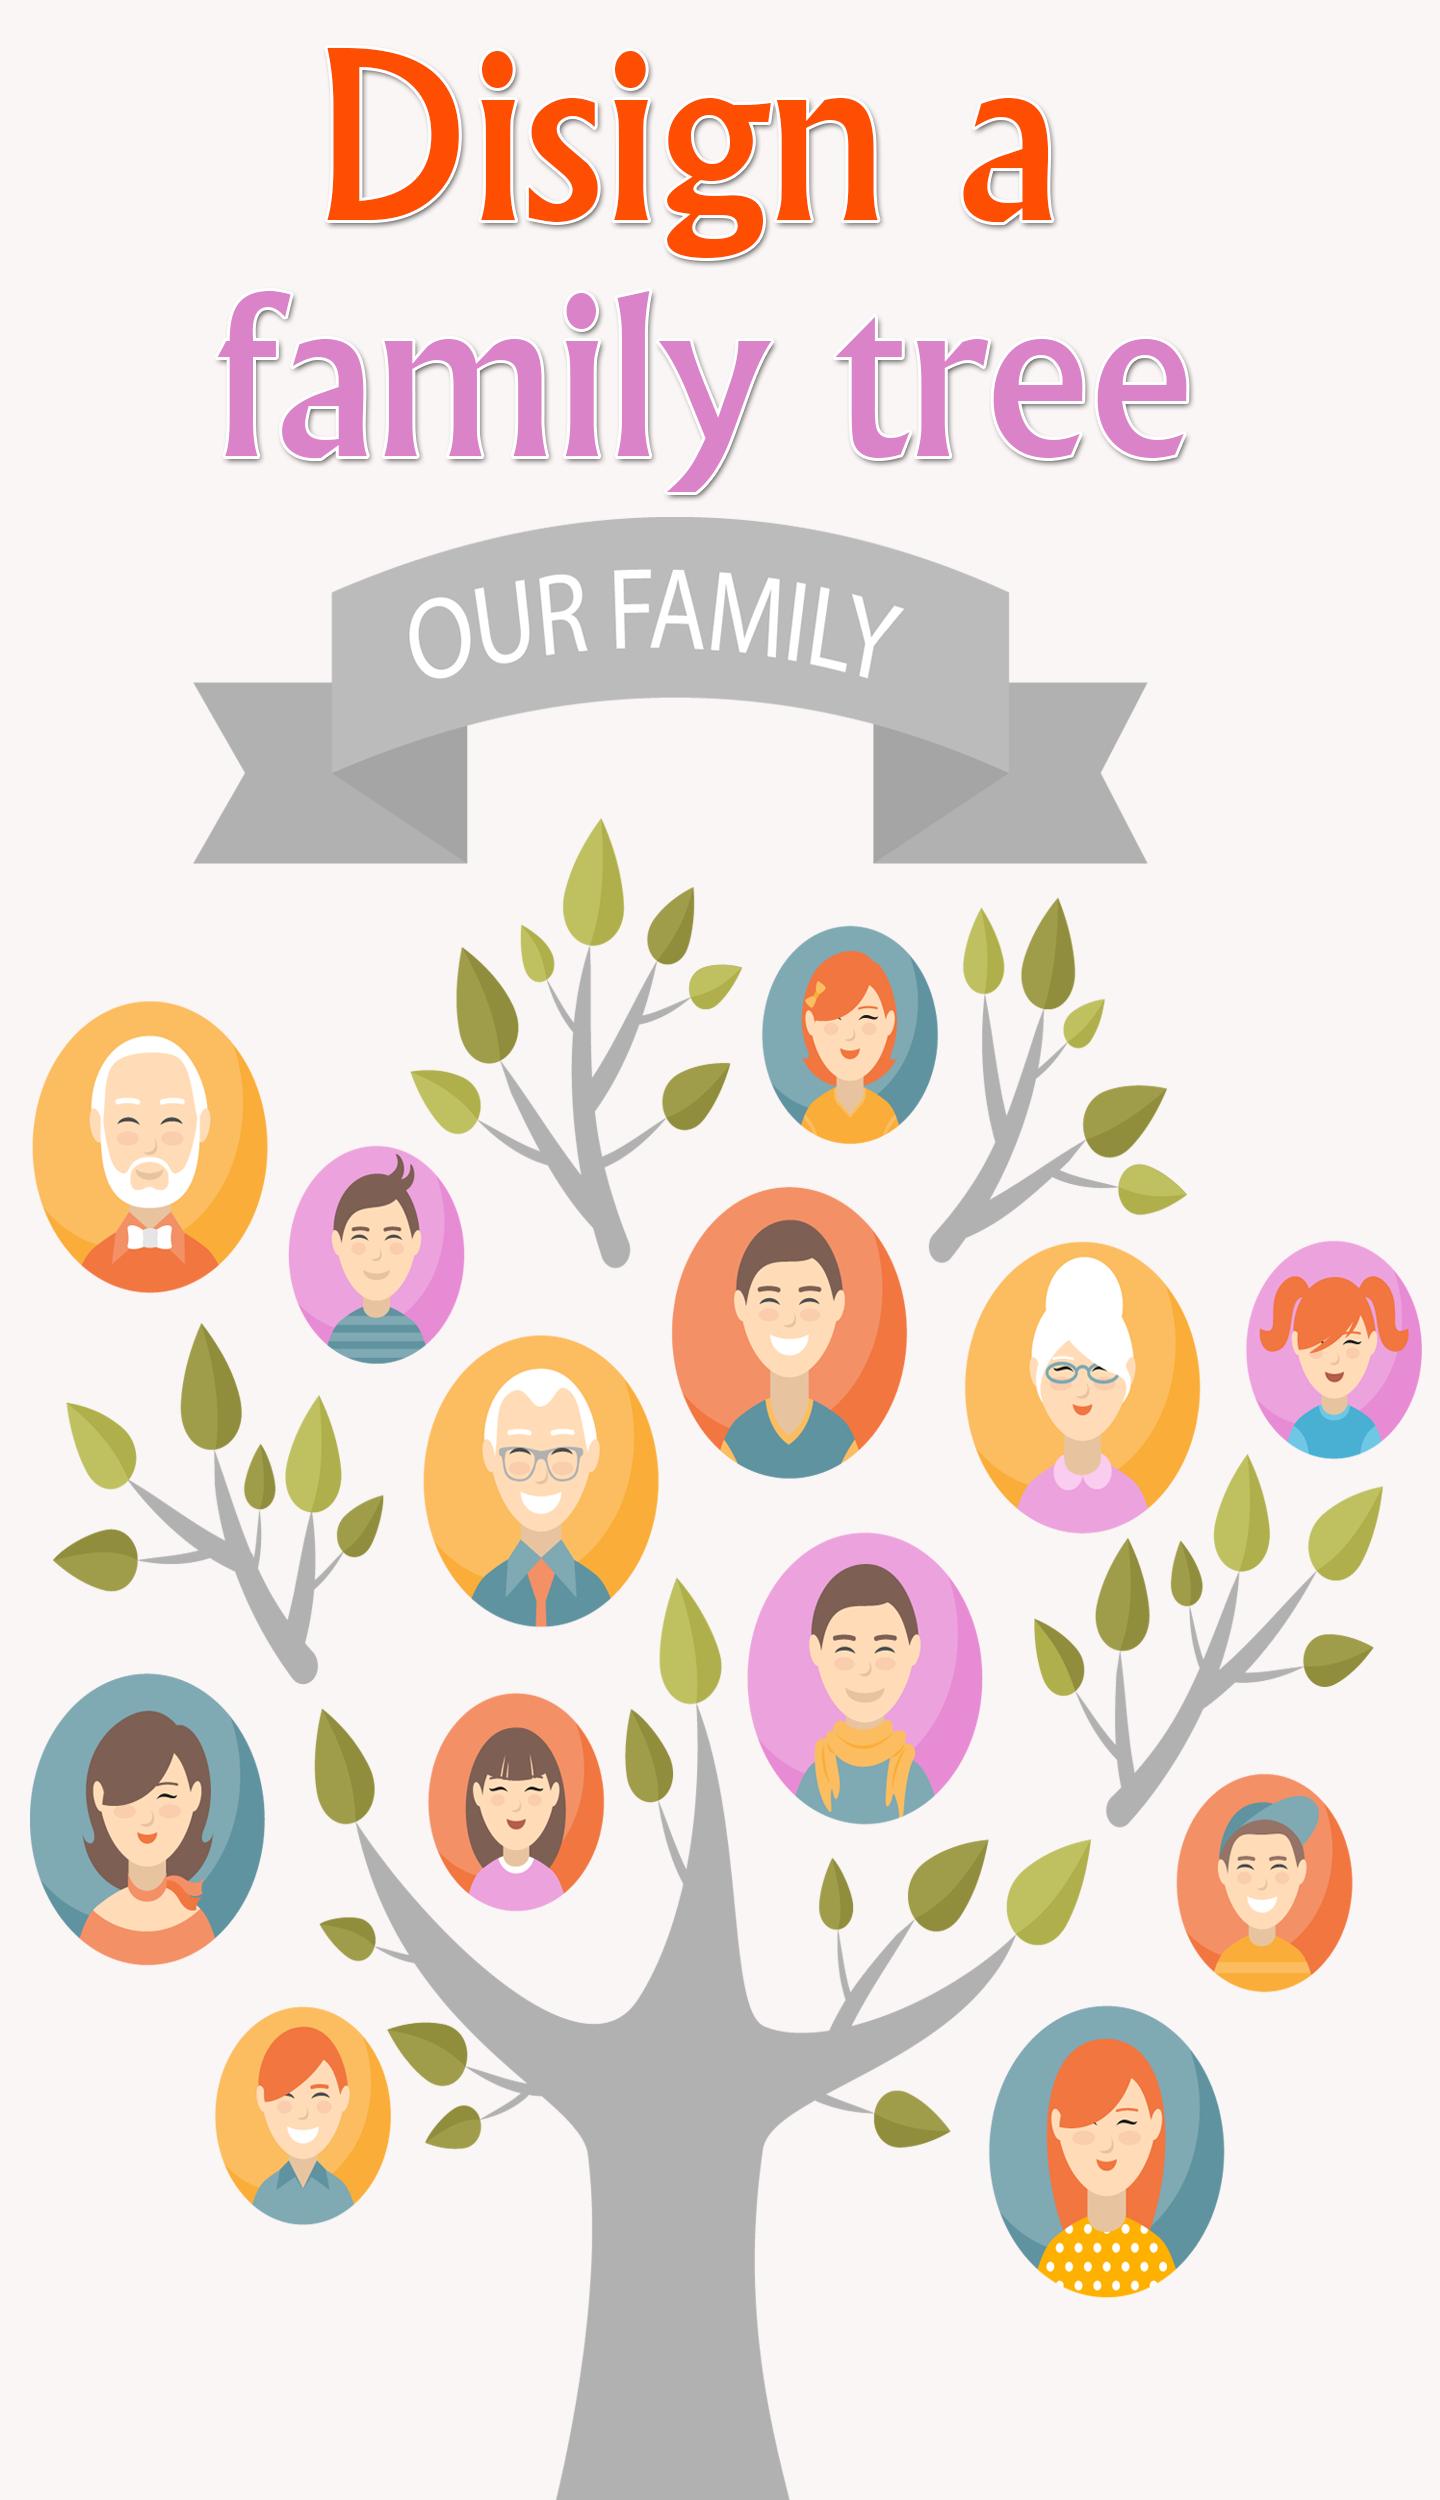 Family Tree شجرة العائلة Shajara